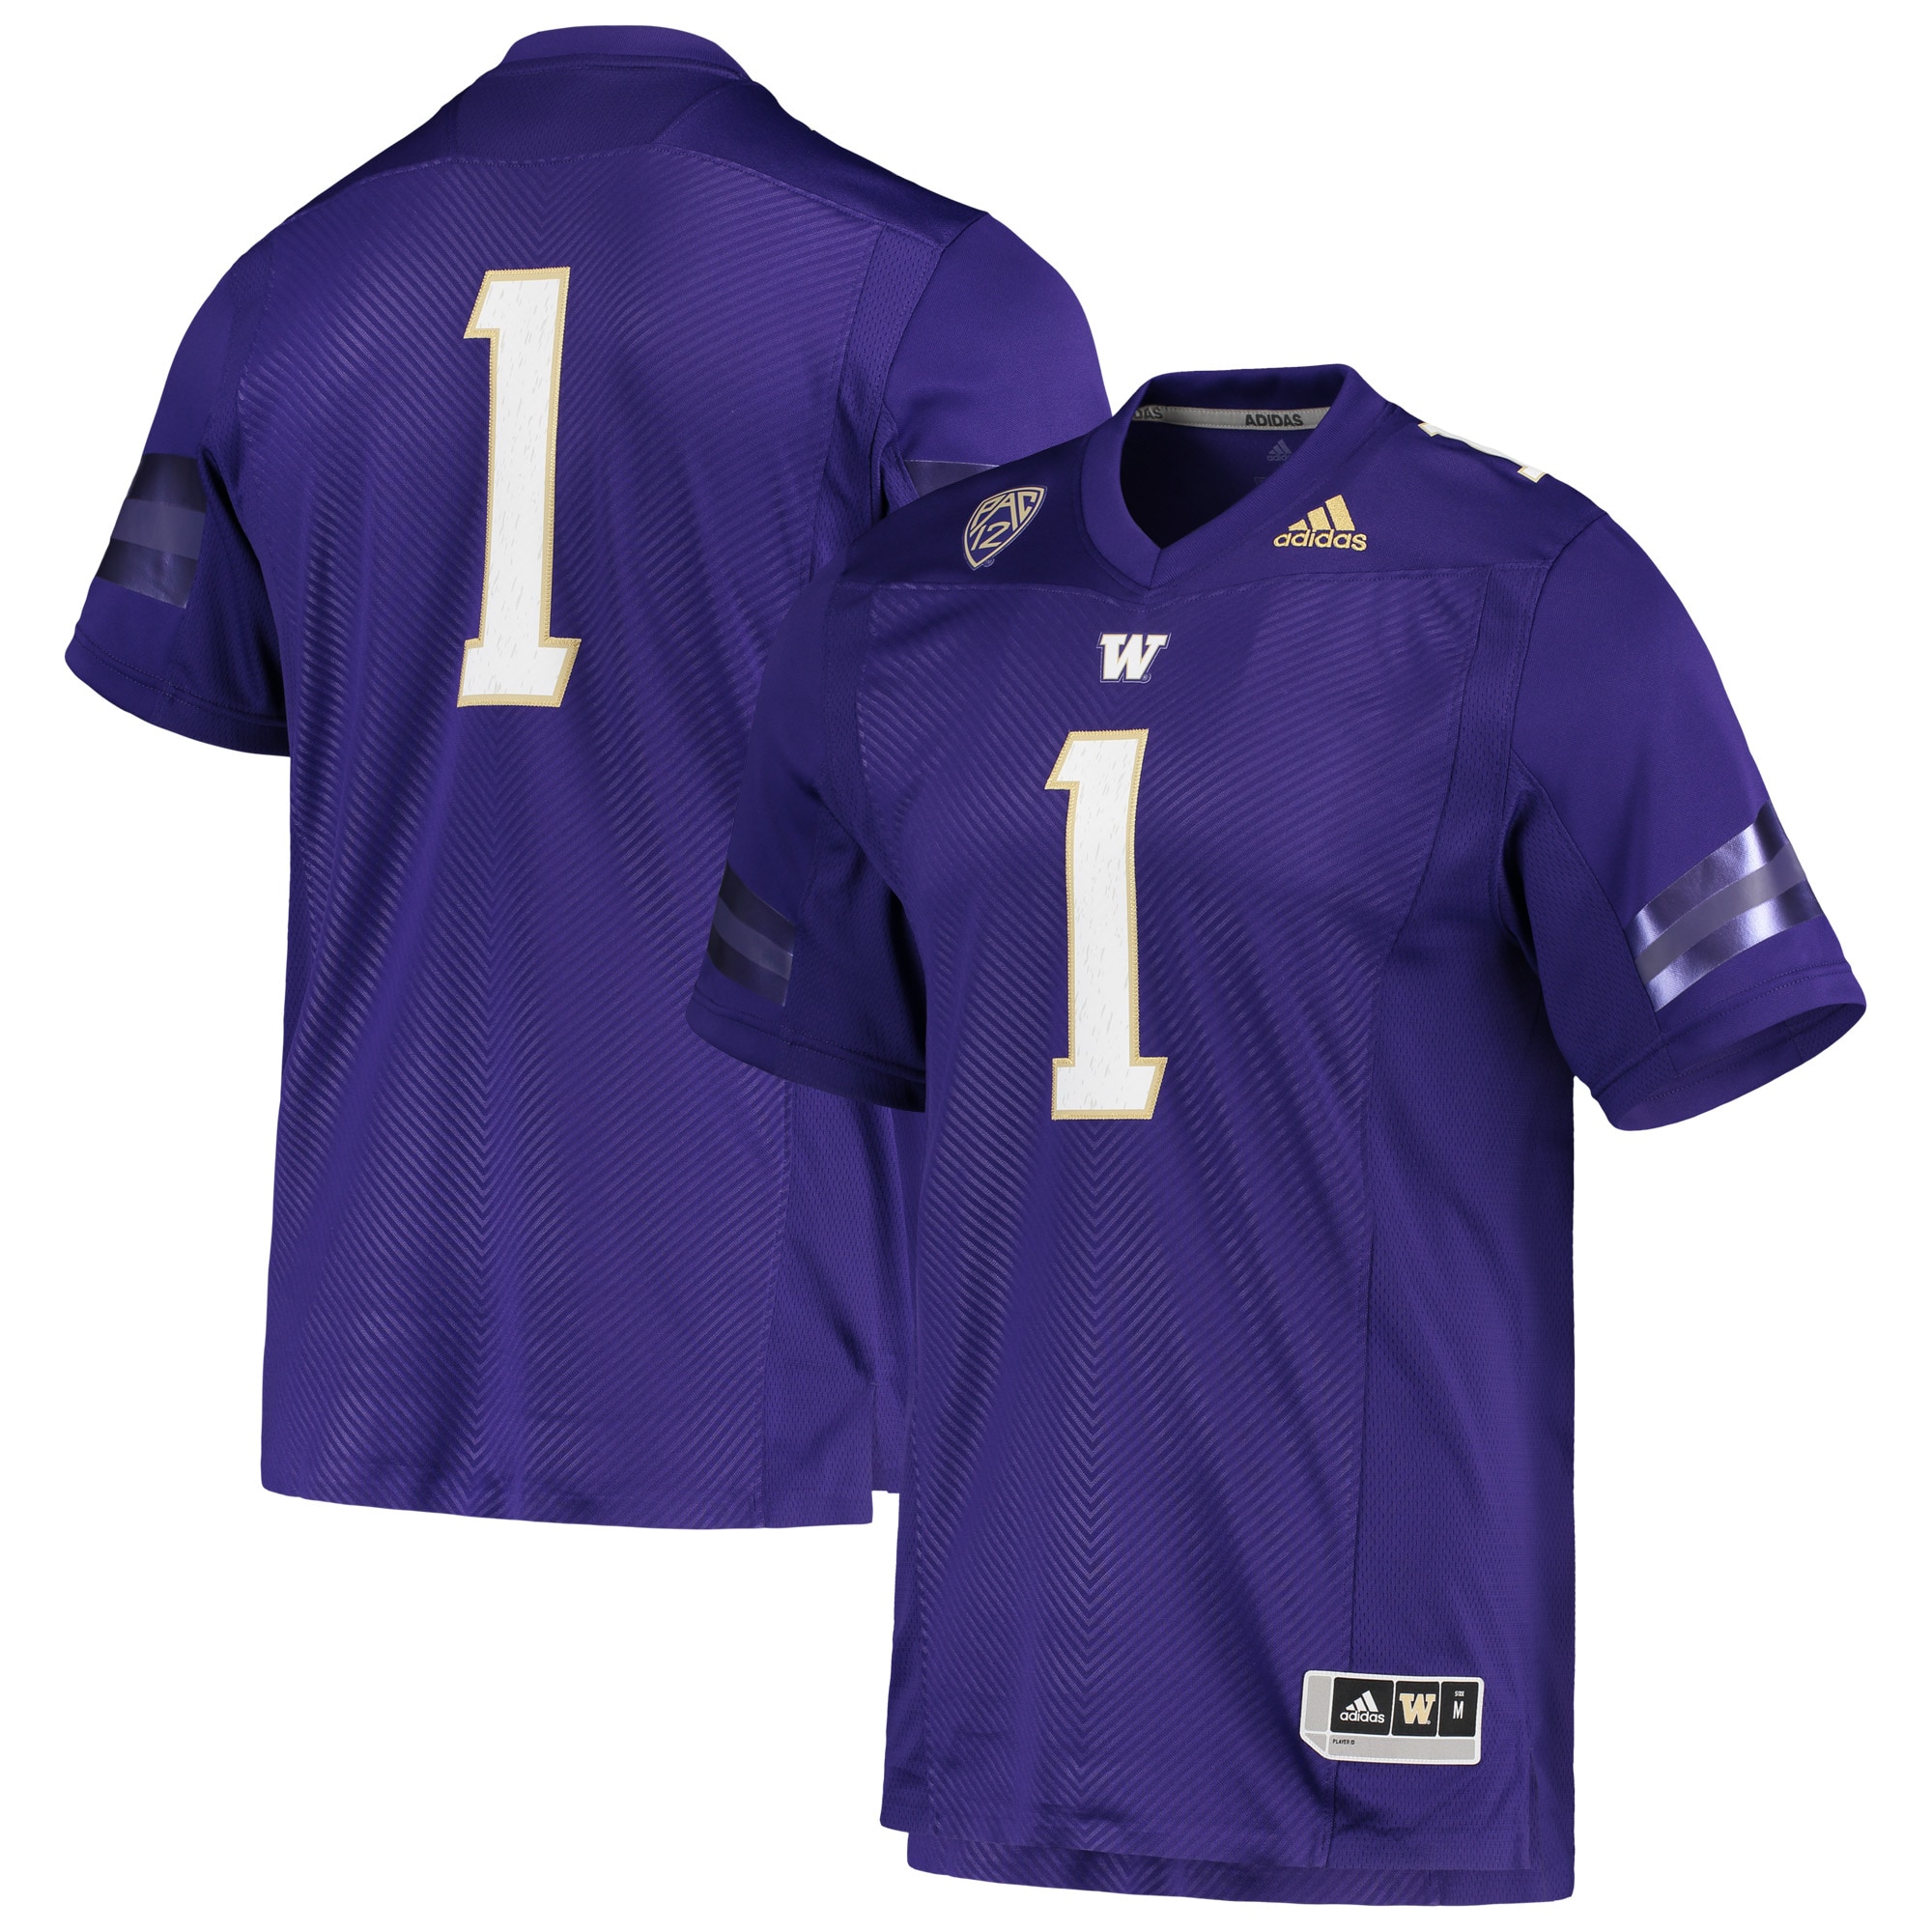 #1 Washington Huskies   Team Premier  Football Shirts Jersey - Purple For Youth Women Men